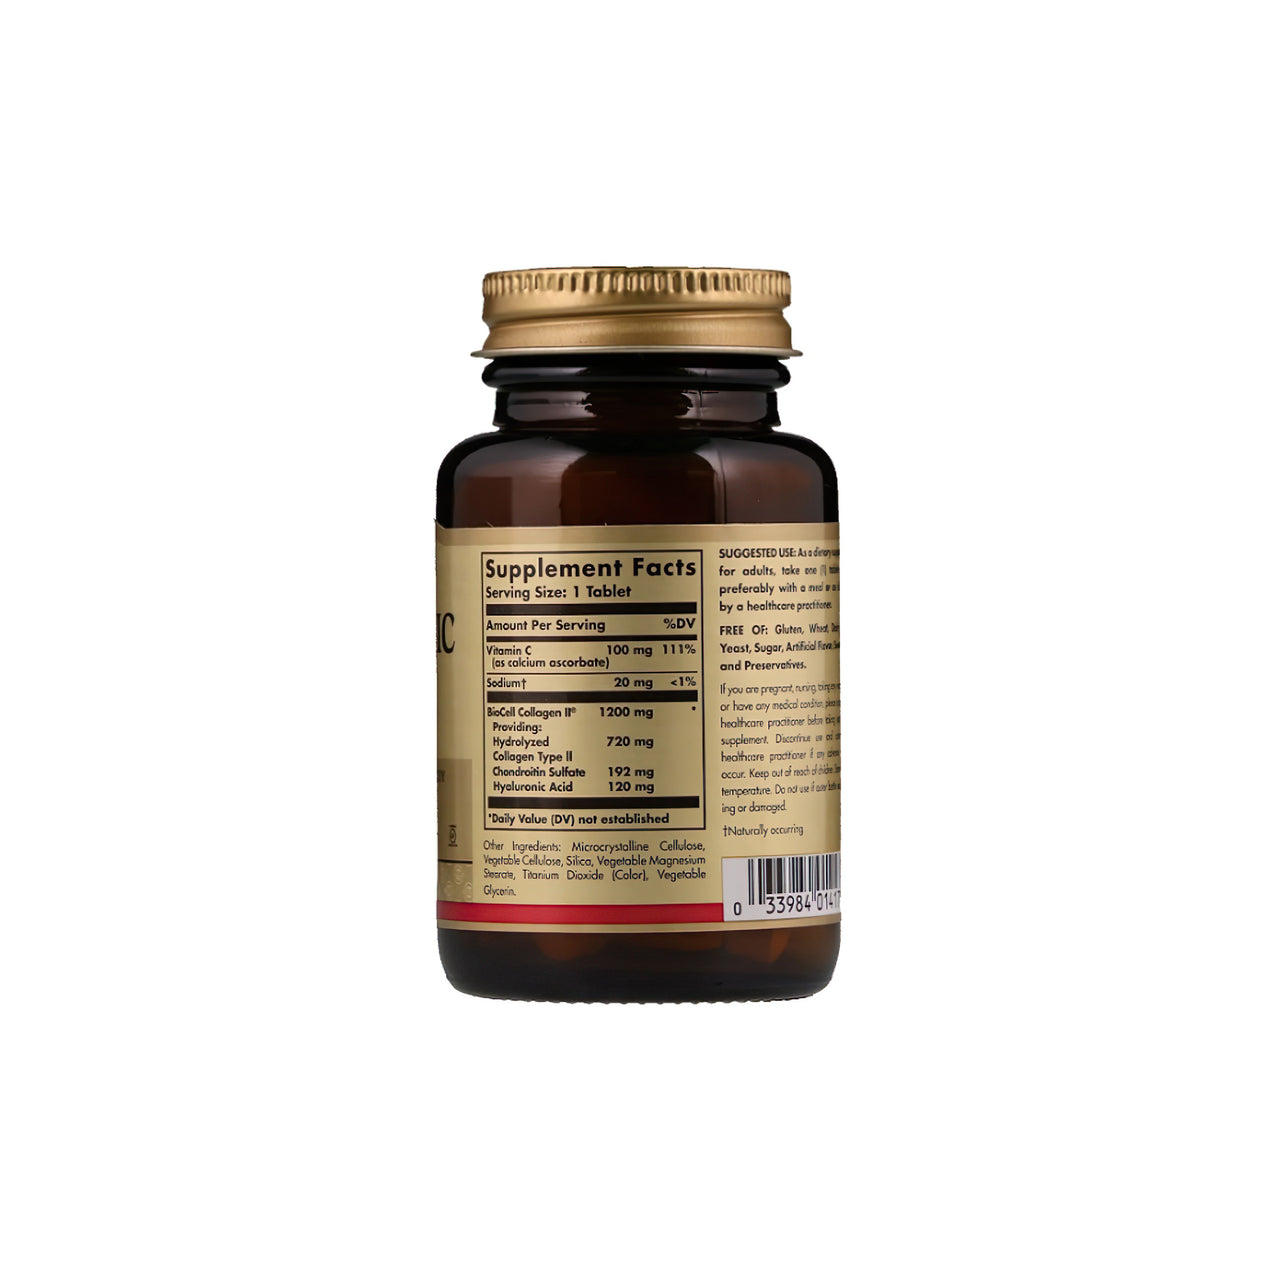 Un frasco de Solgar Suplemento de ácido hialurónico 120 mg 30 comp. sobre fondo blanco.